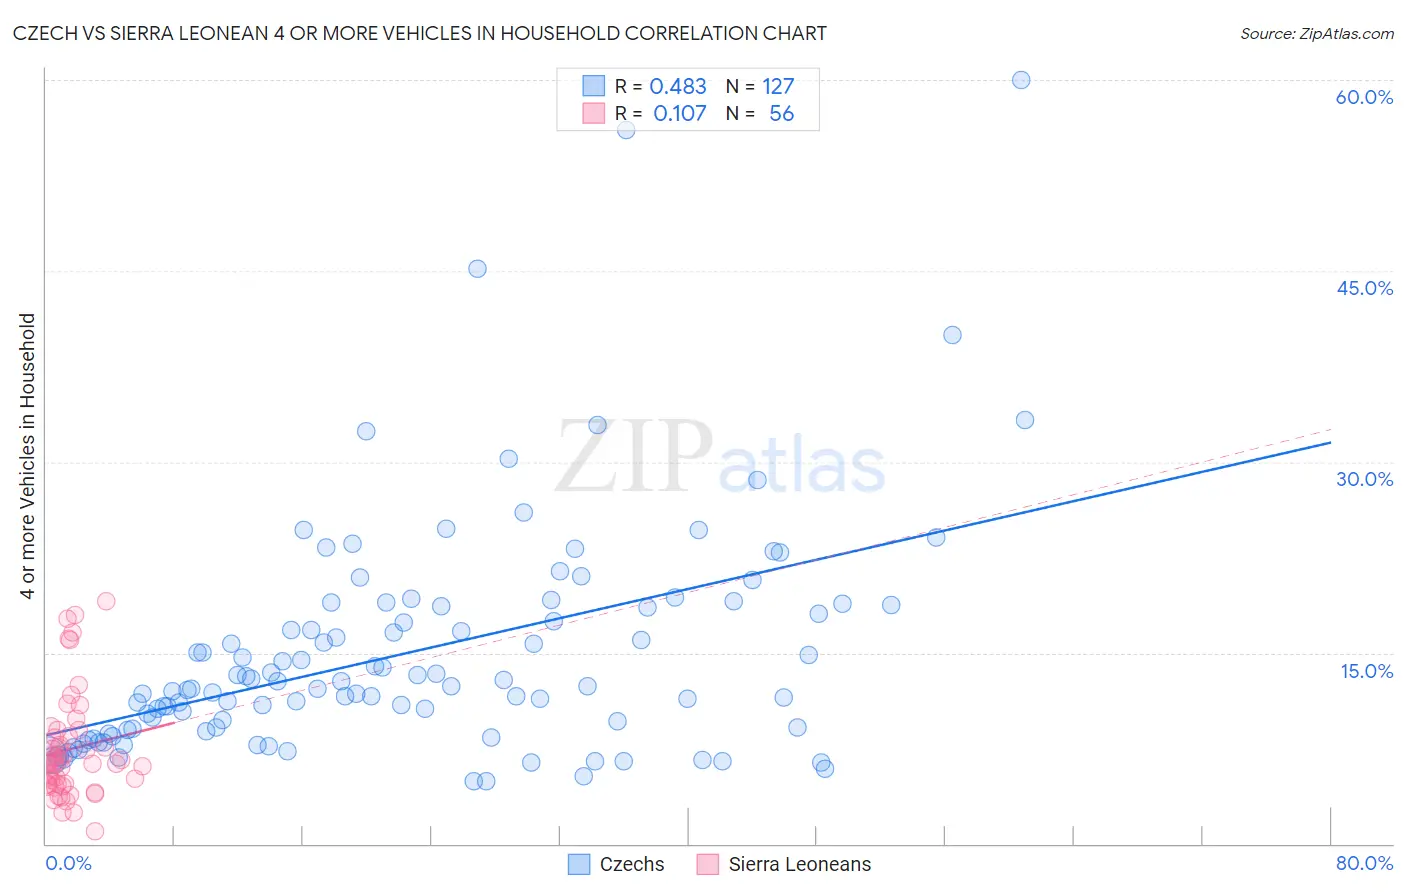 Czech vs Sierra Leonean 4 or more Vehicles in Household